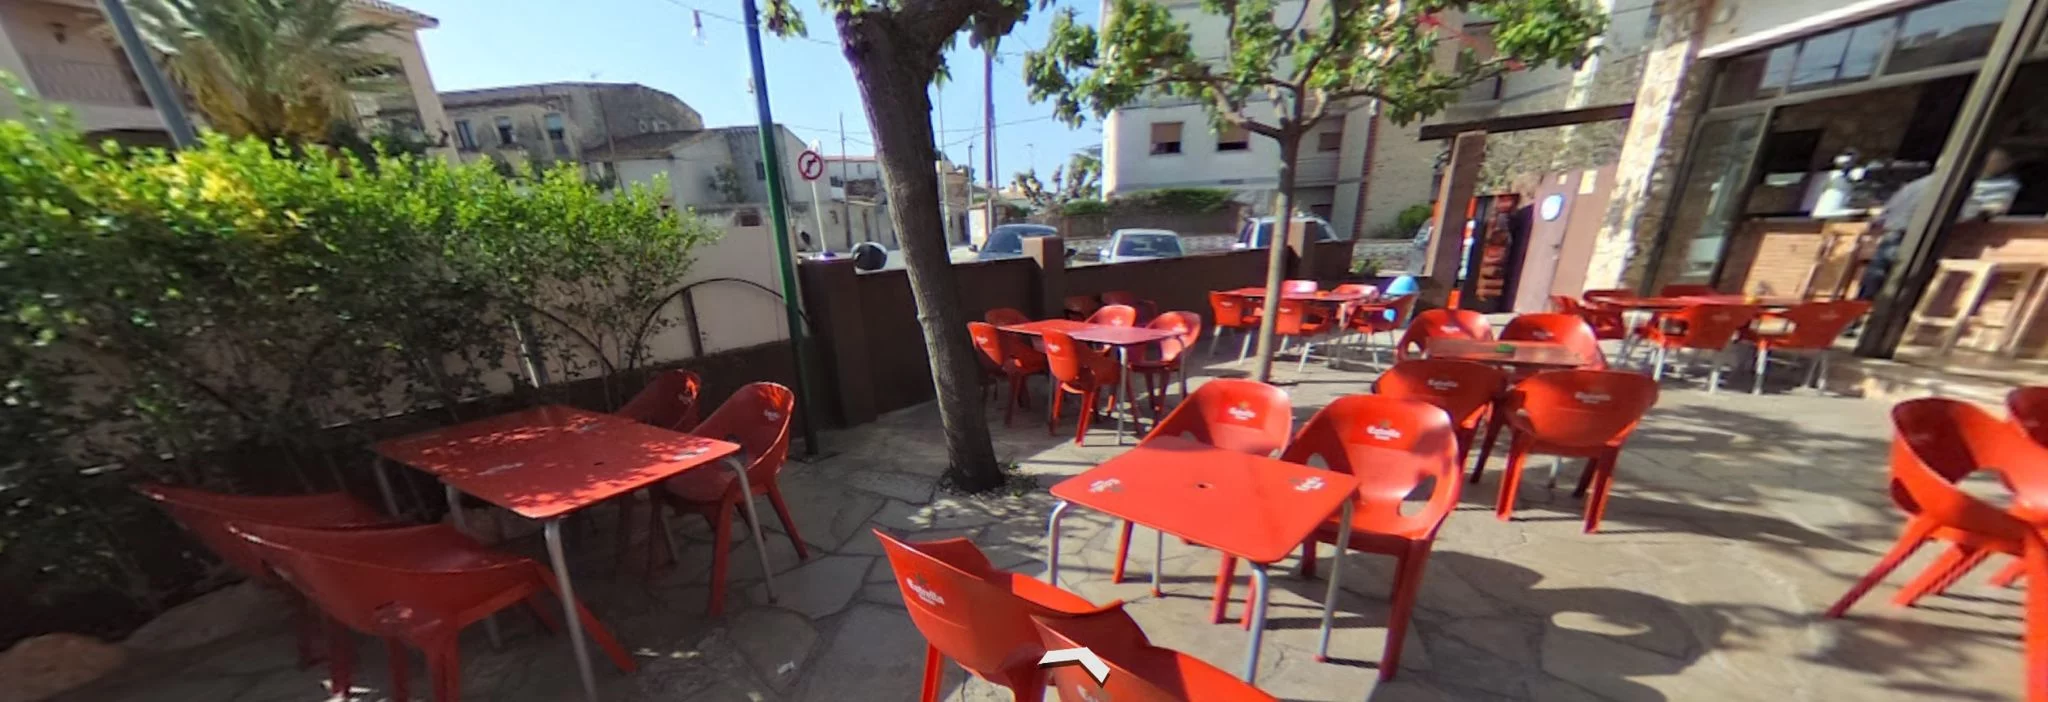 Traspaso de restaurante de gran tradición con amplia terraza en Torredembarra (Tarragona)